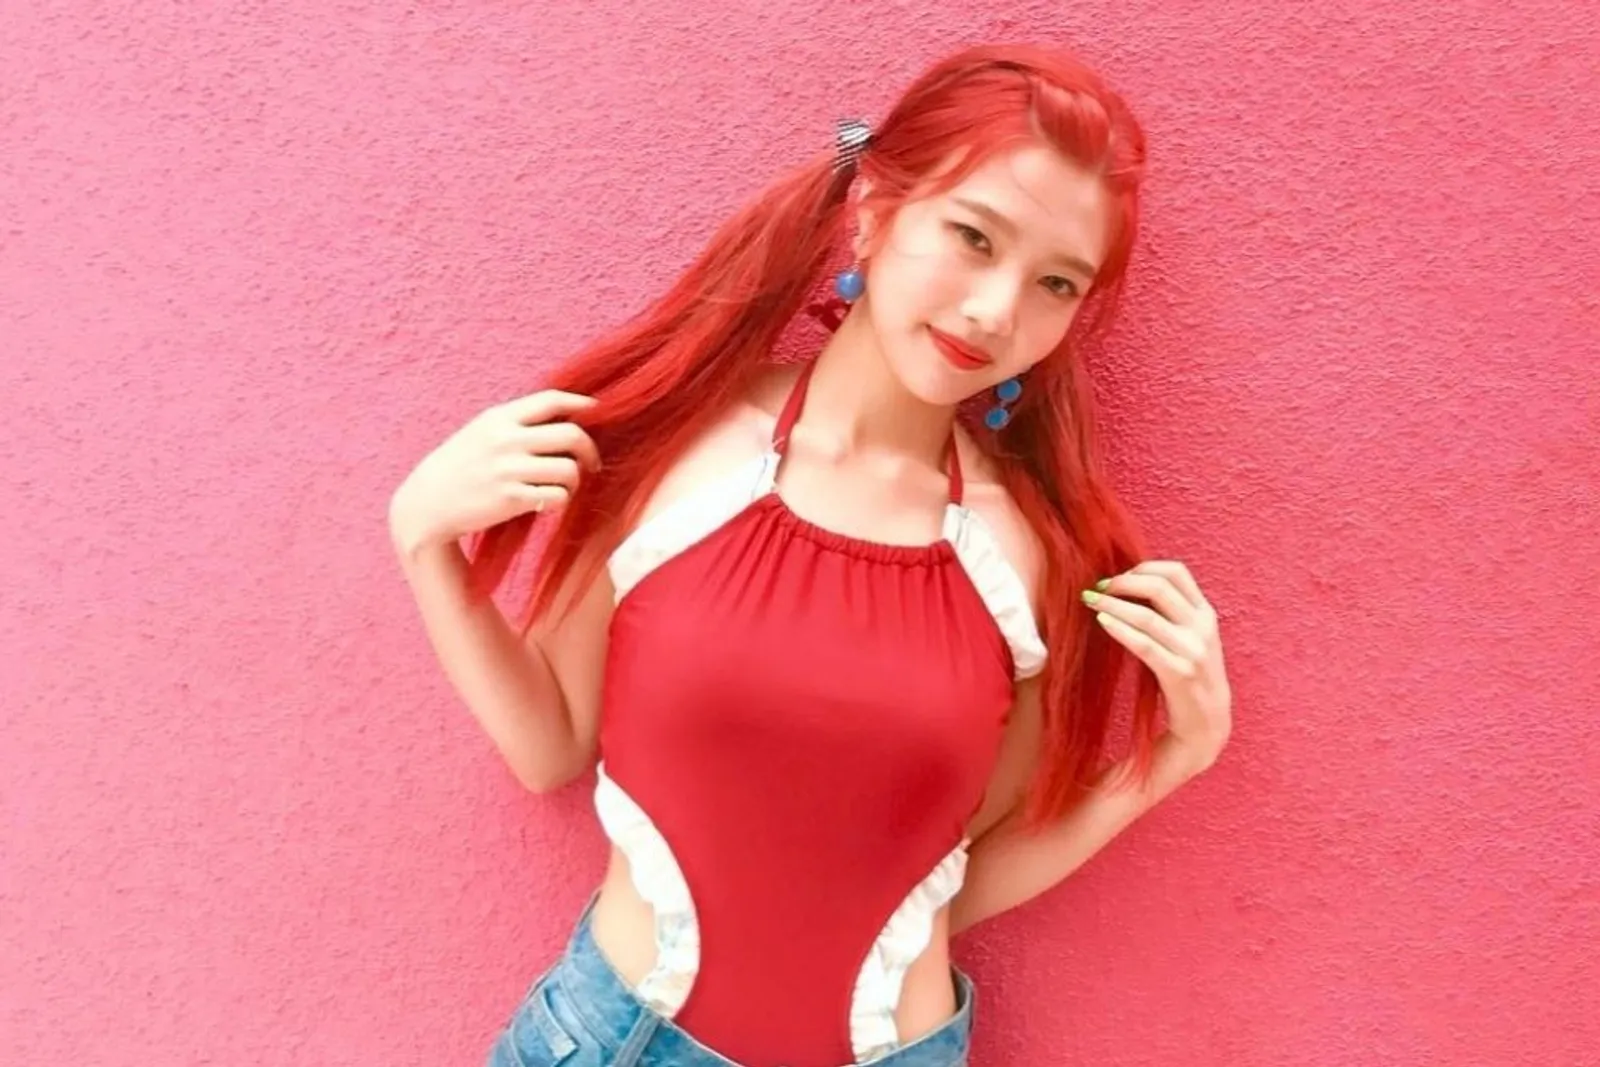 Segera Luncurkan Album Solo, Intip Potret Seksi Joy 'Red Velvet'